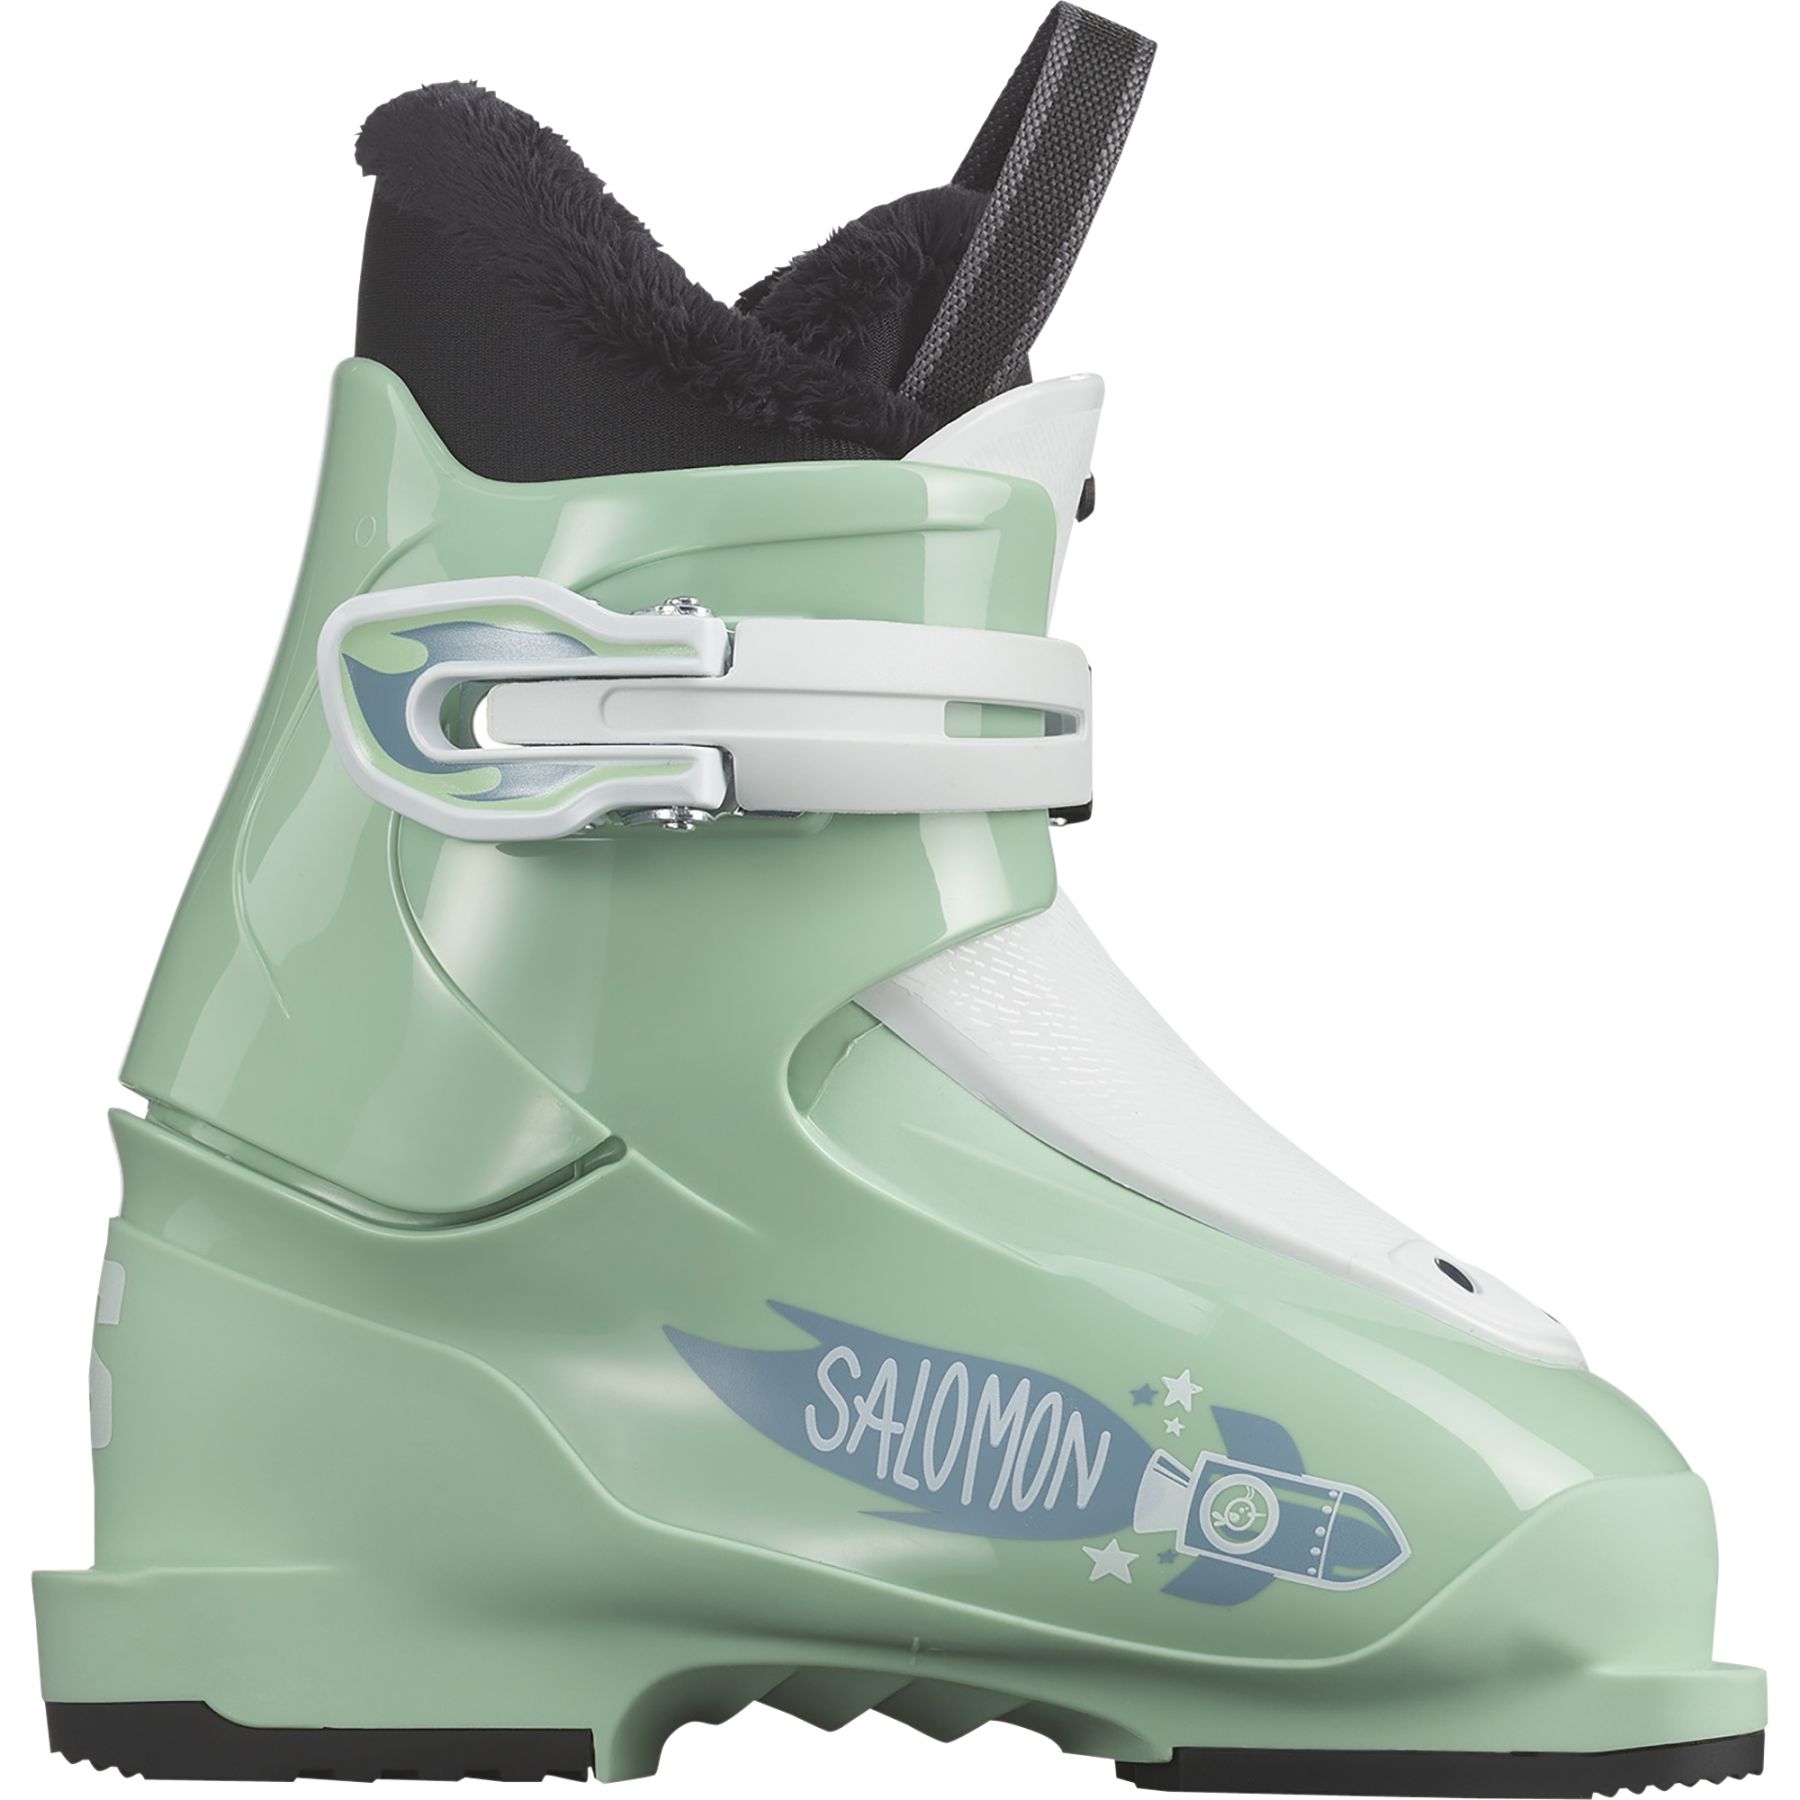 Salomon T1, skistøvler, børn, lysegrøn thumbnail